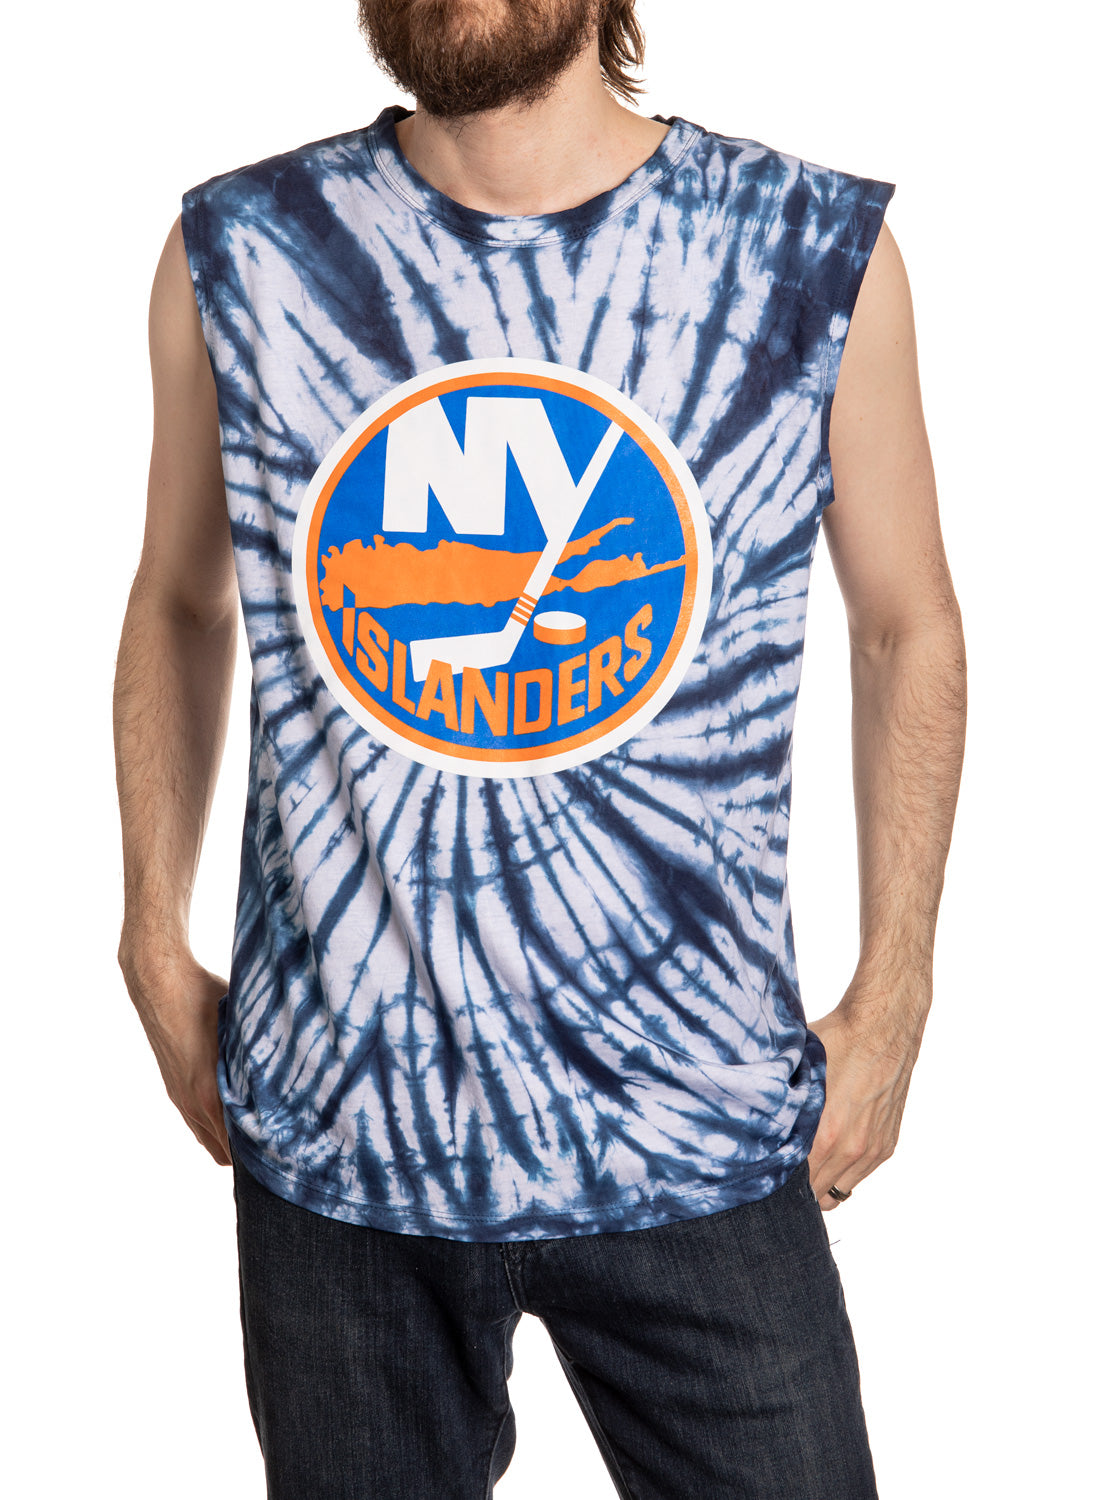 New York Islanders Spiral Tie Dye Sleeveless Shirt Front View